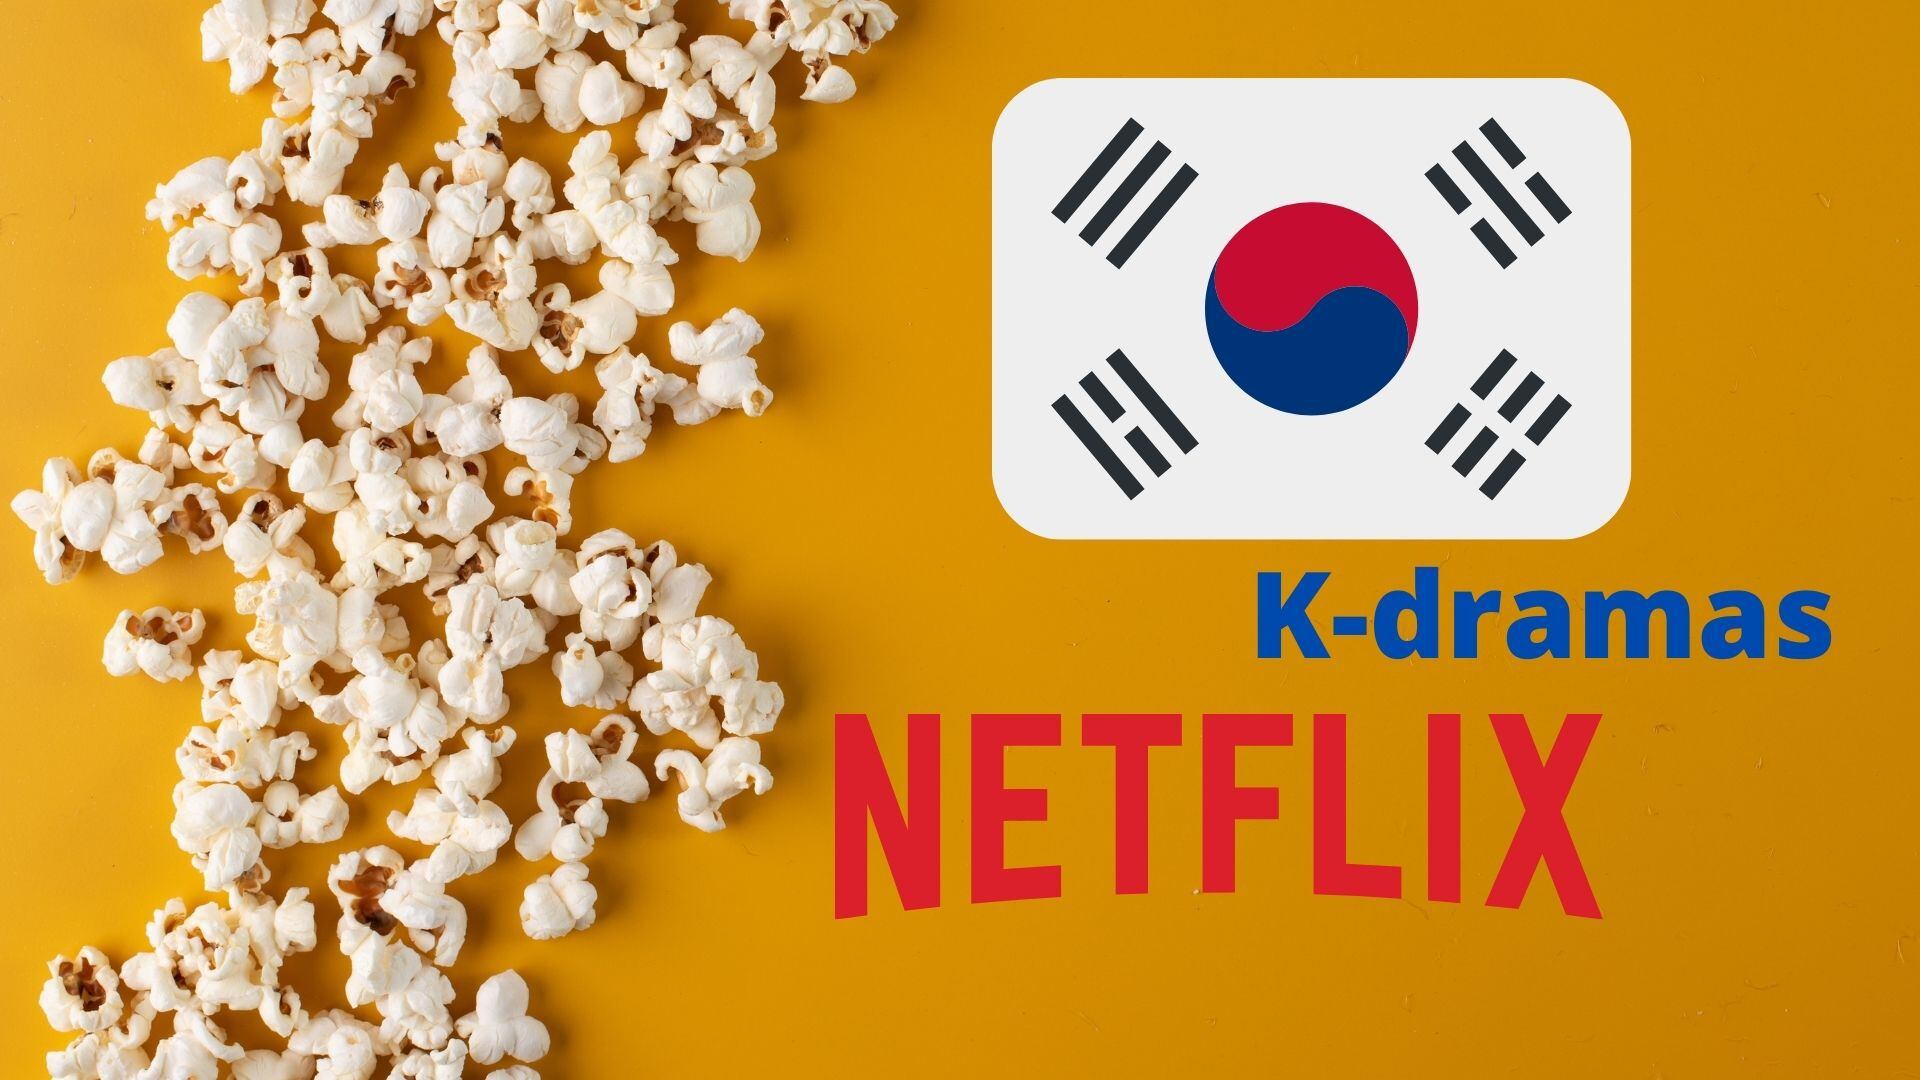 Ranking K-dramas Netflix